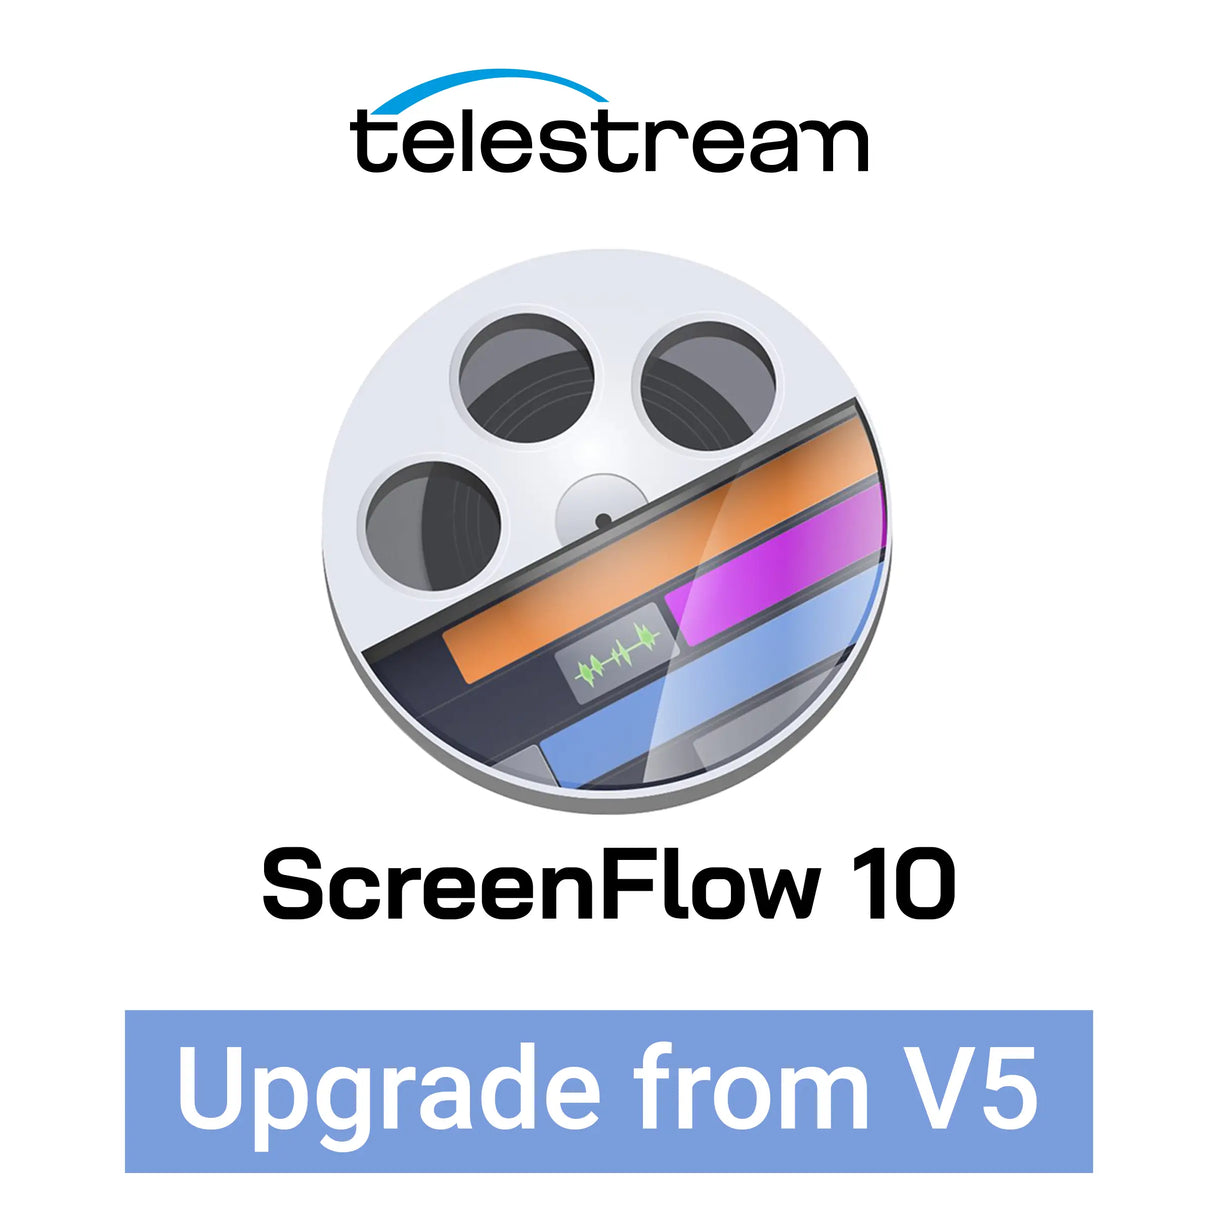 Telestream ScreenFlow 10 Video Editing Software Upgrade from V5